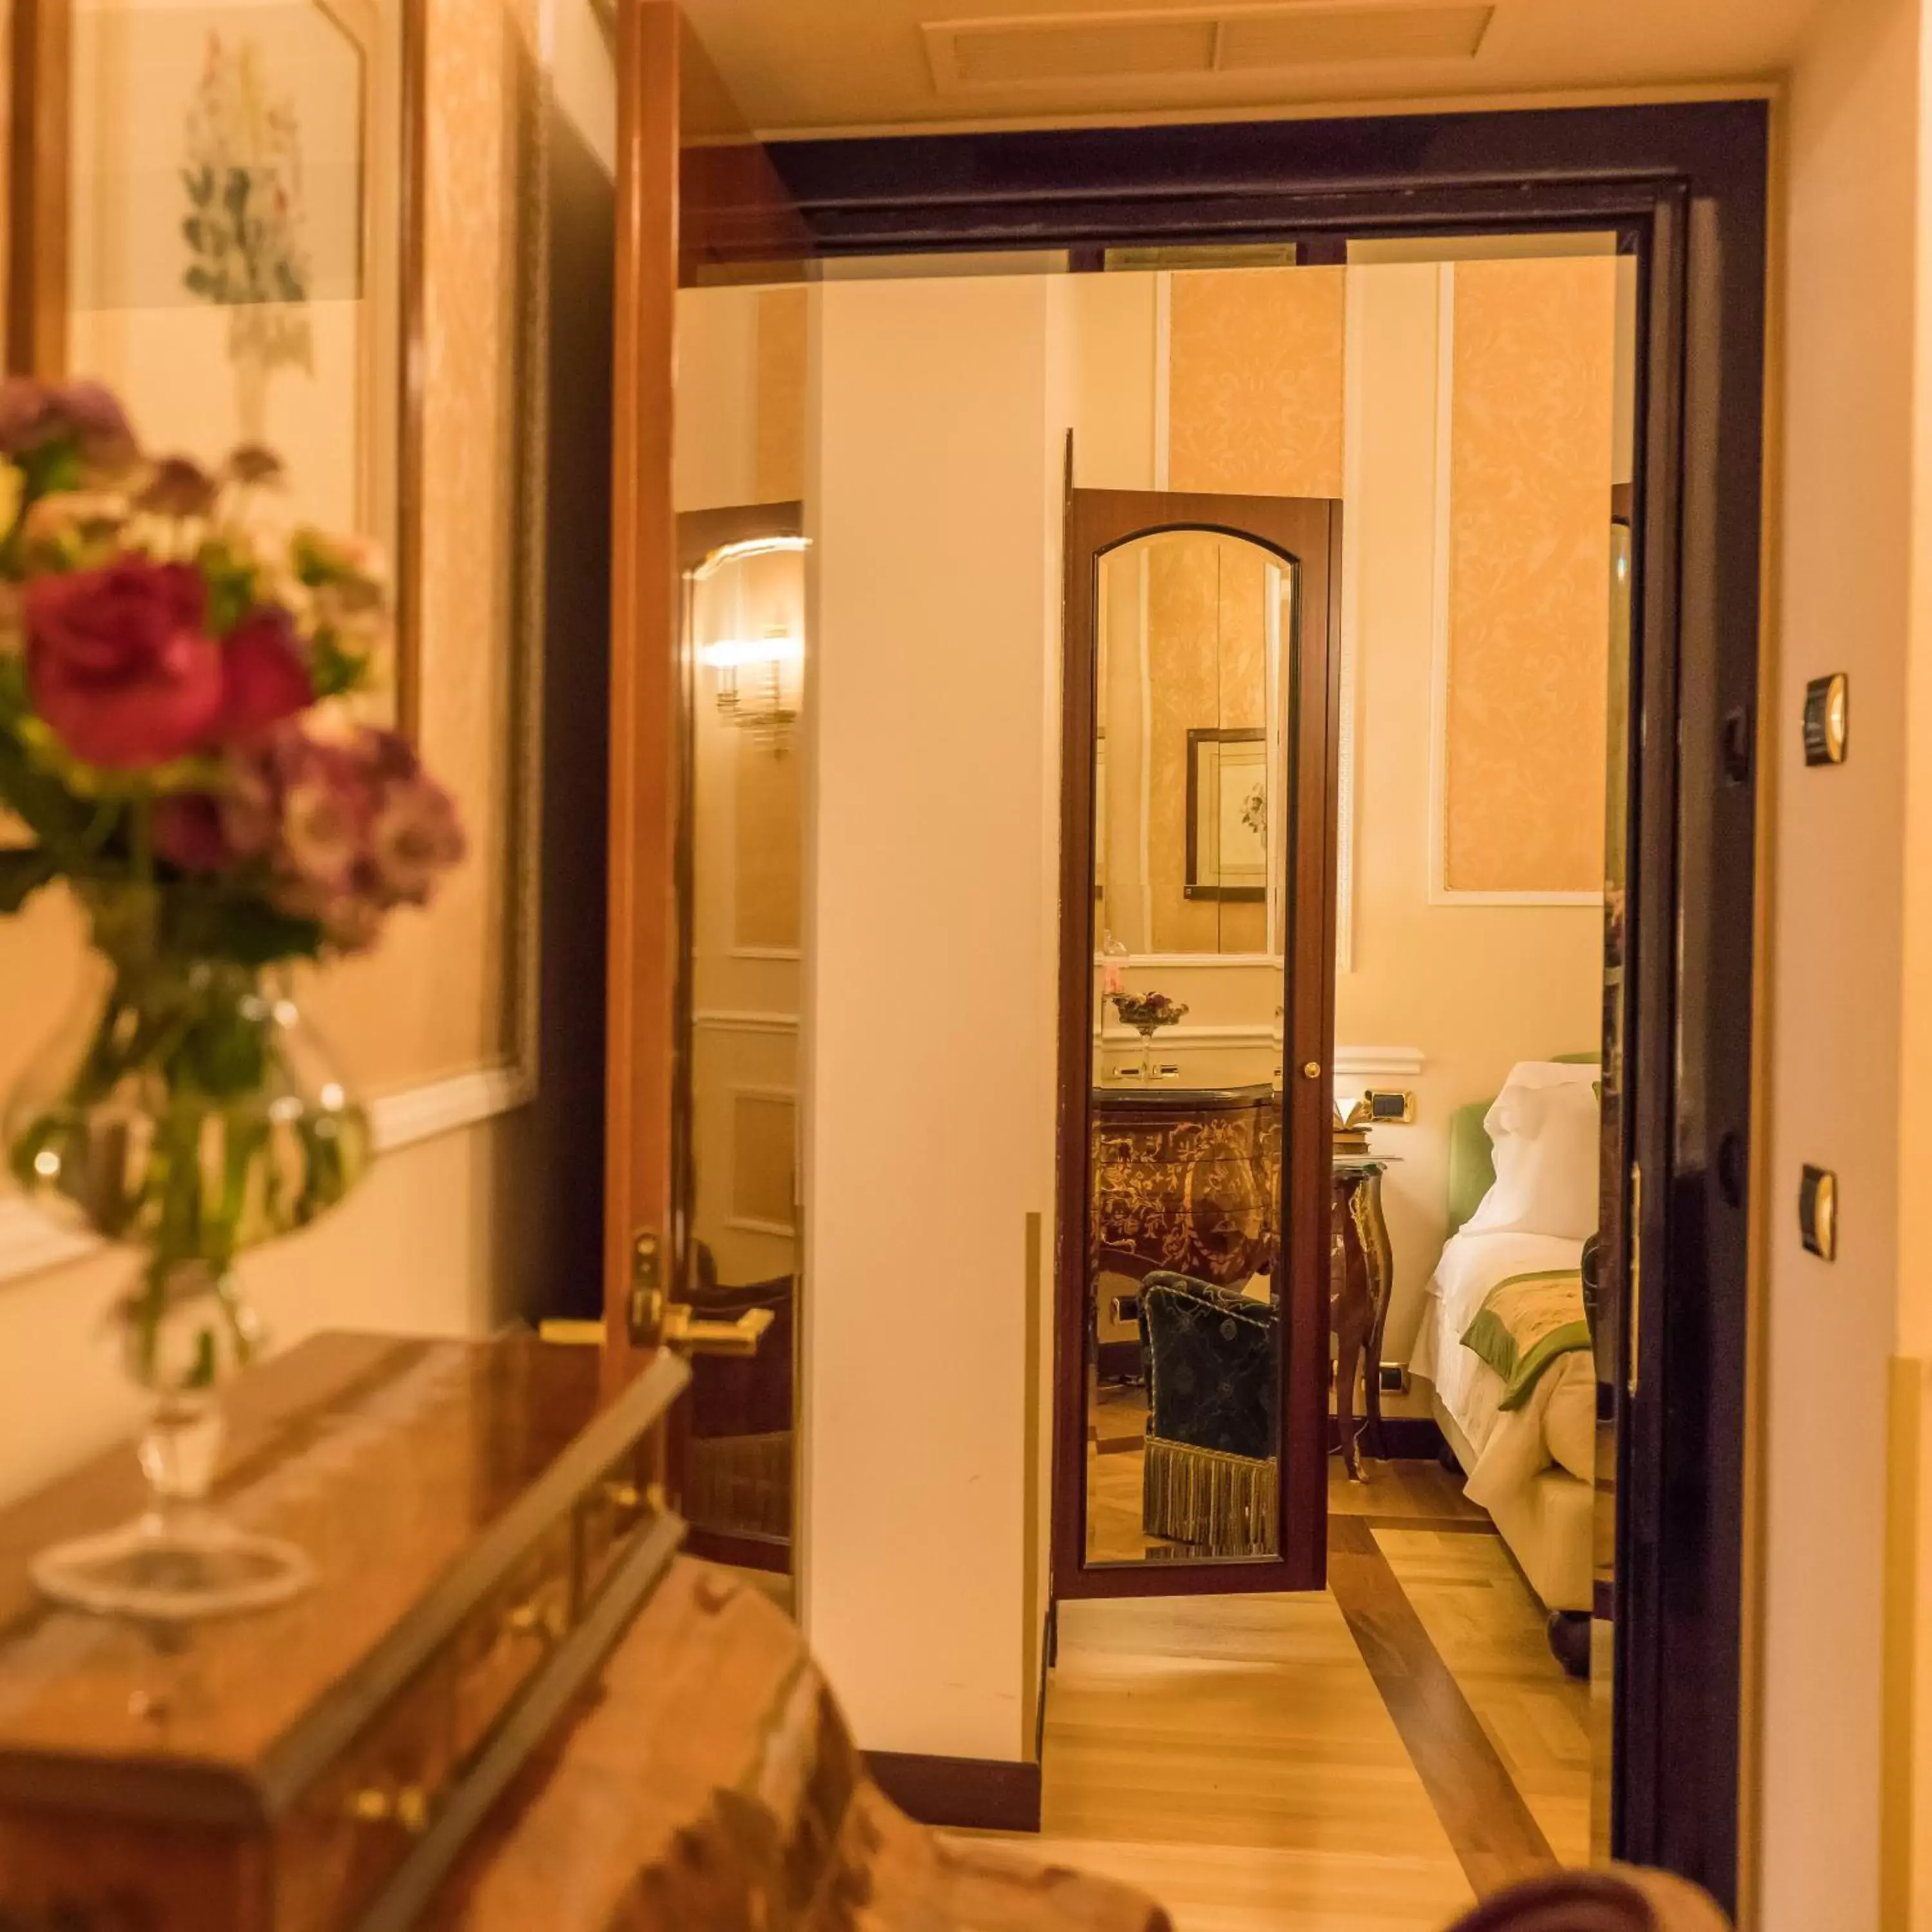 Bedroom in Hotel Bernini Palace